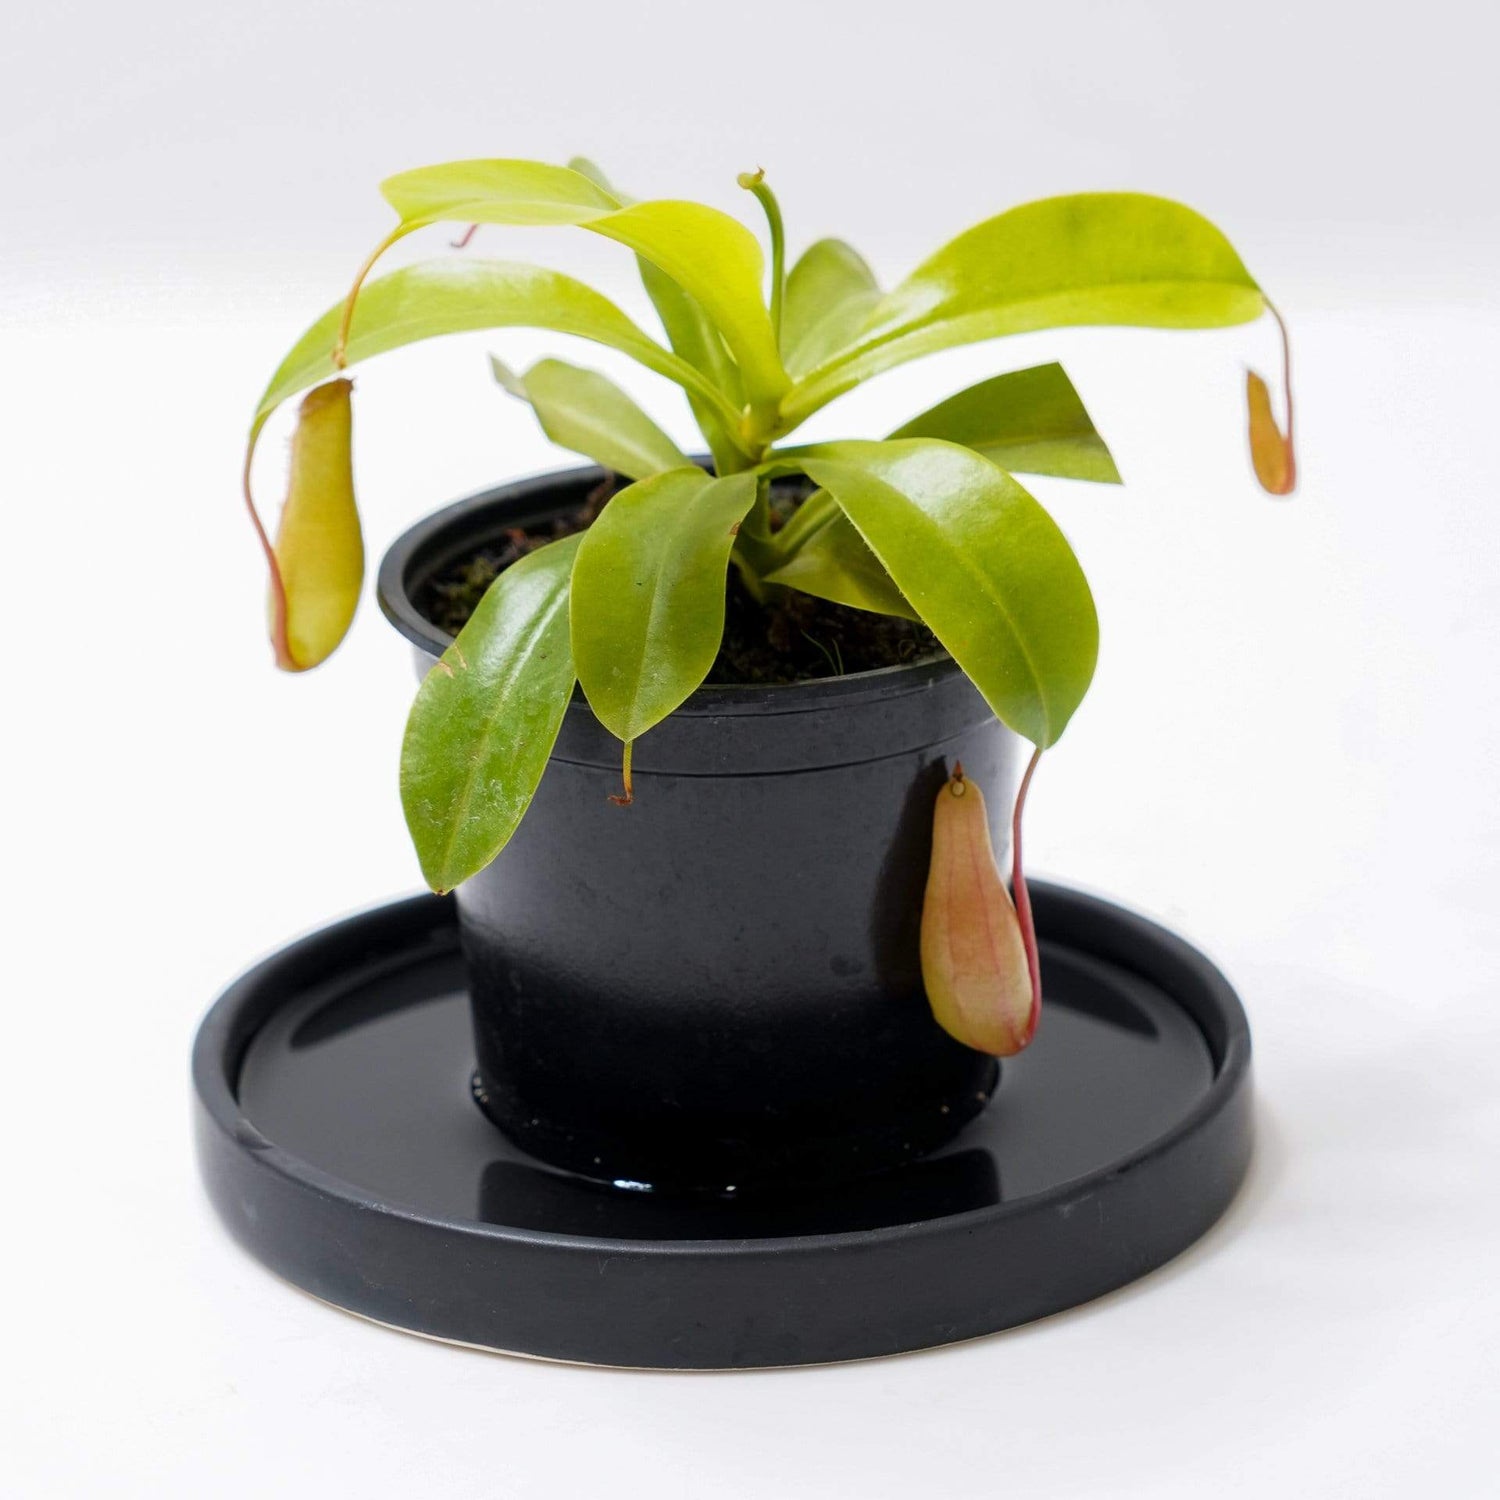 Urban Sprouts Plant 4" in nursery pot Carnivorous 'Monkey Pitcher - Ventrata'